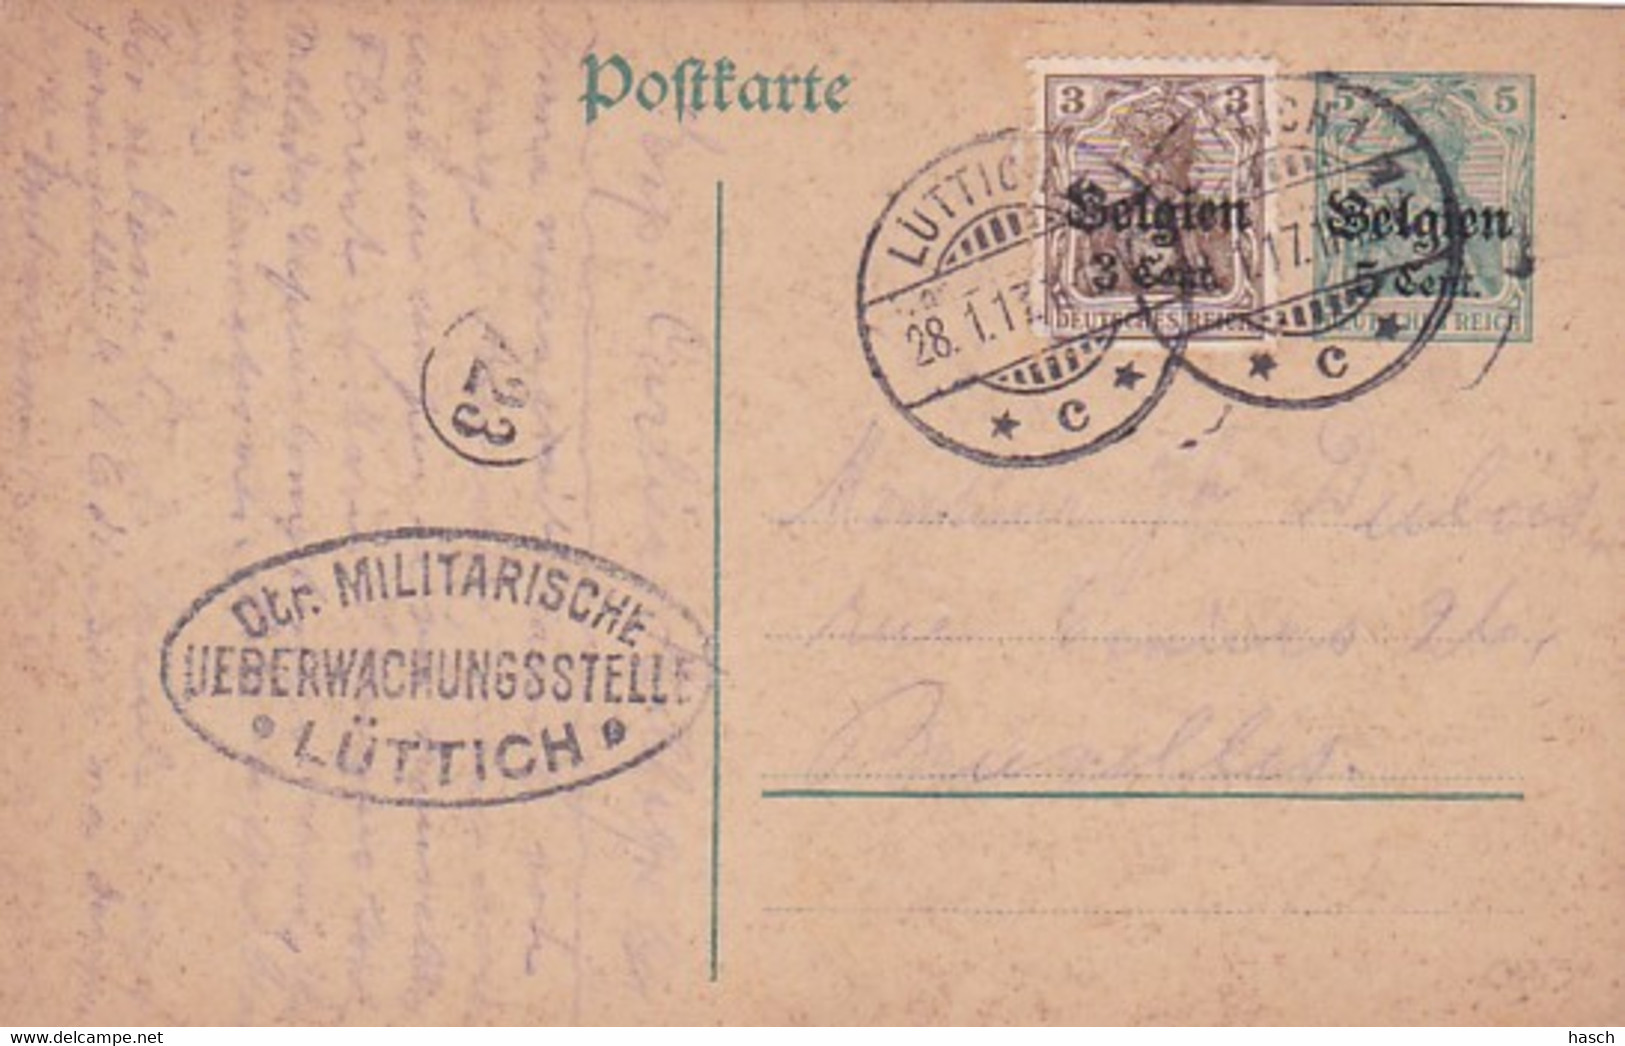 383-24Belgische Briefkaart 28-1-1917 Naar Brussel Met Censuurstempel Ctr. Militarische Ueberwachungsstelle  *Lüttich* - Deutsche Besatzung